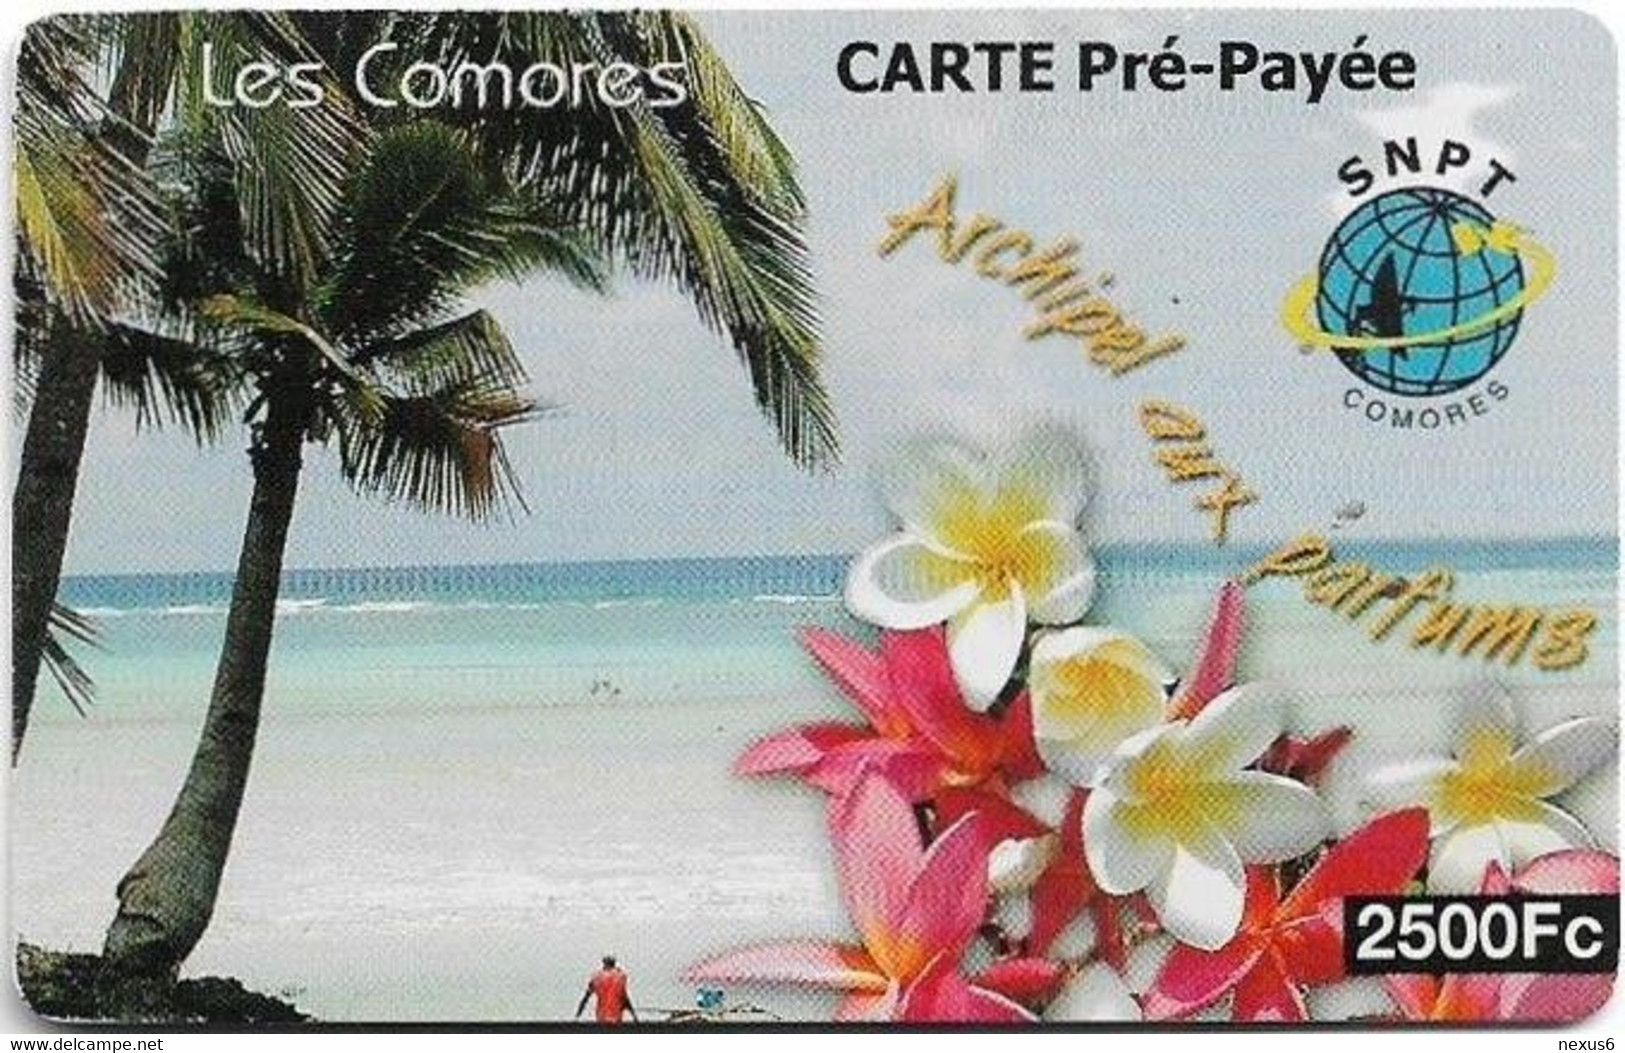 Comoros - S.N.P.T. - Archipel Aux Parfums, GSM Refill 2.500CF, Used - Komoren